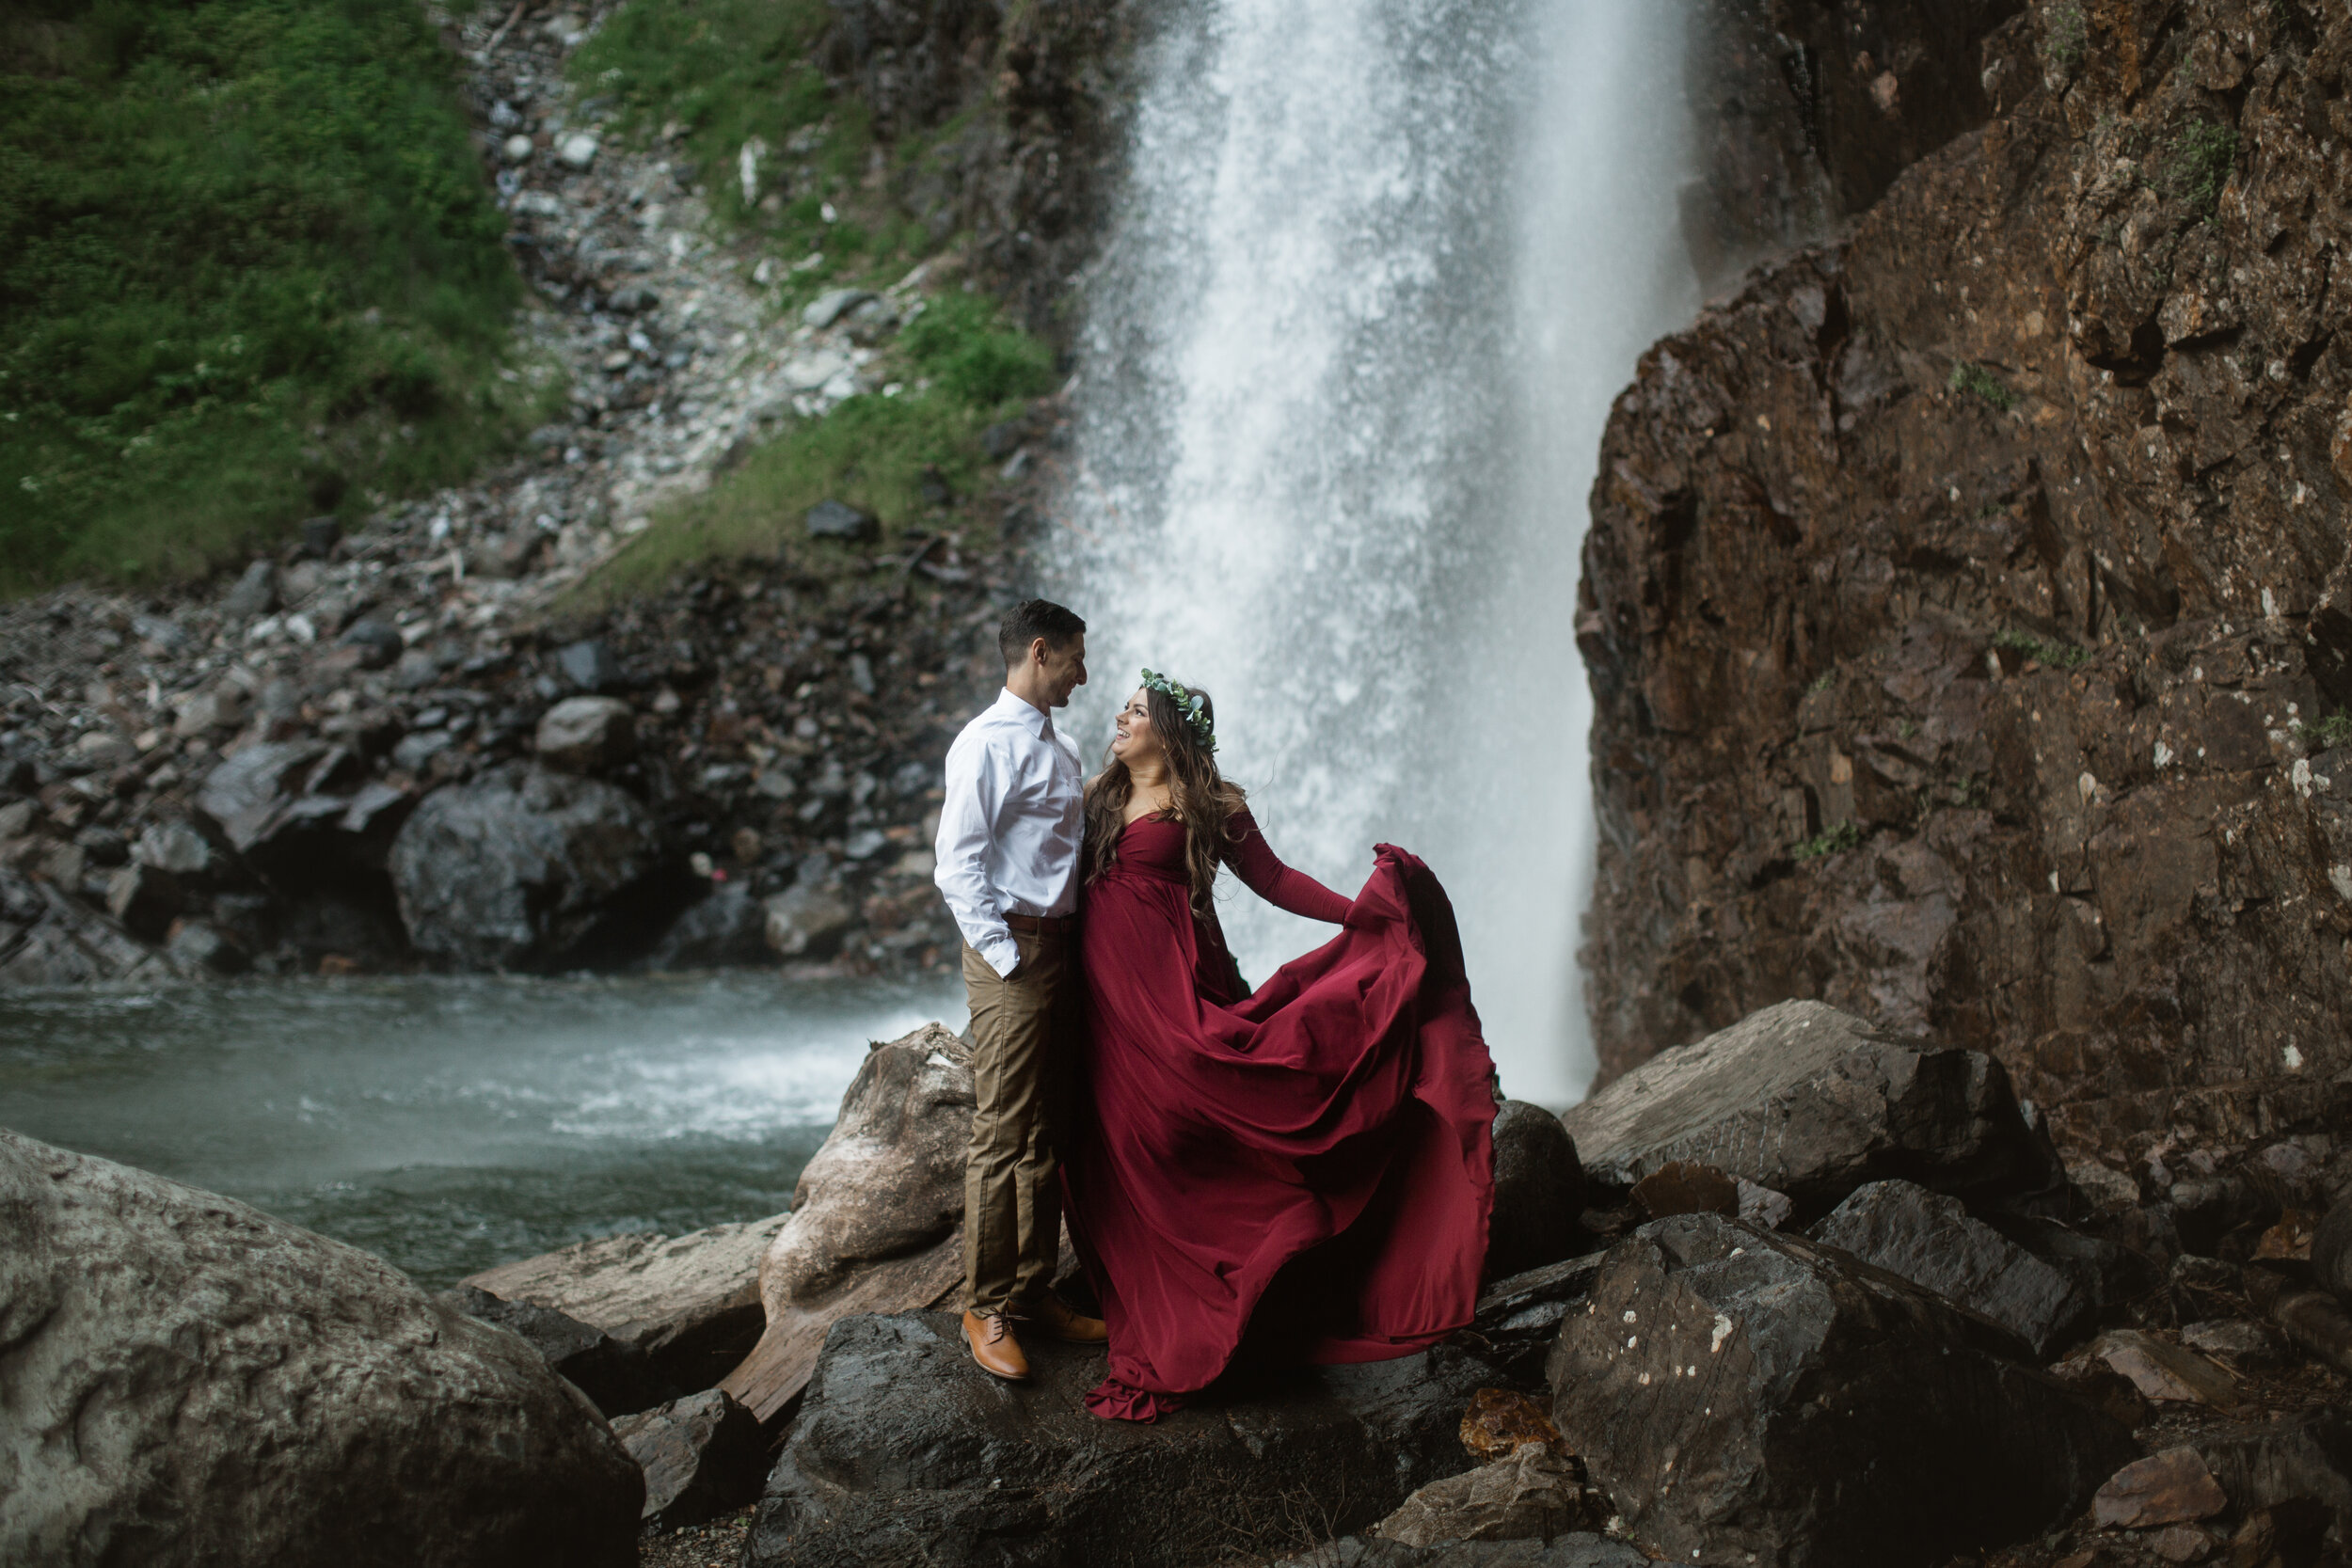 nicole-daacke-photography-gold-creek-pond-franklin-falls-waterfall-summer-adventure-engagement-session-elopement-photographer-washington-summer-engagement-photos-snoqualmie-pass-115.jpg